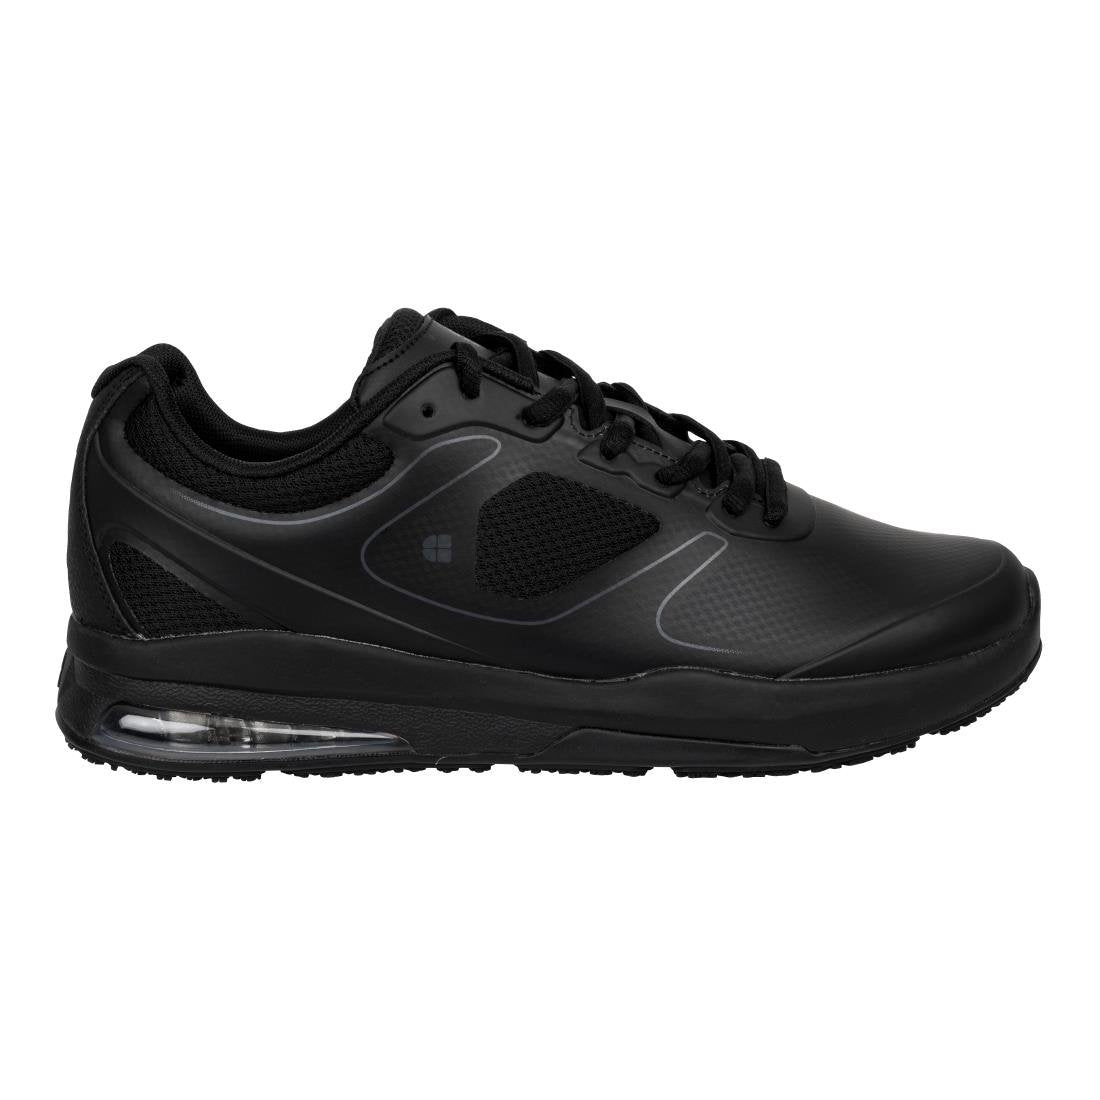 BB586-49 Shoes for Crews Men's Evolution Trainers Black Size 49